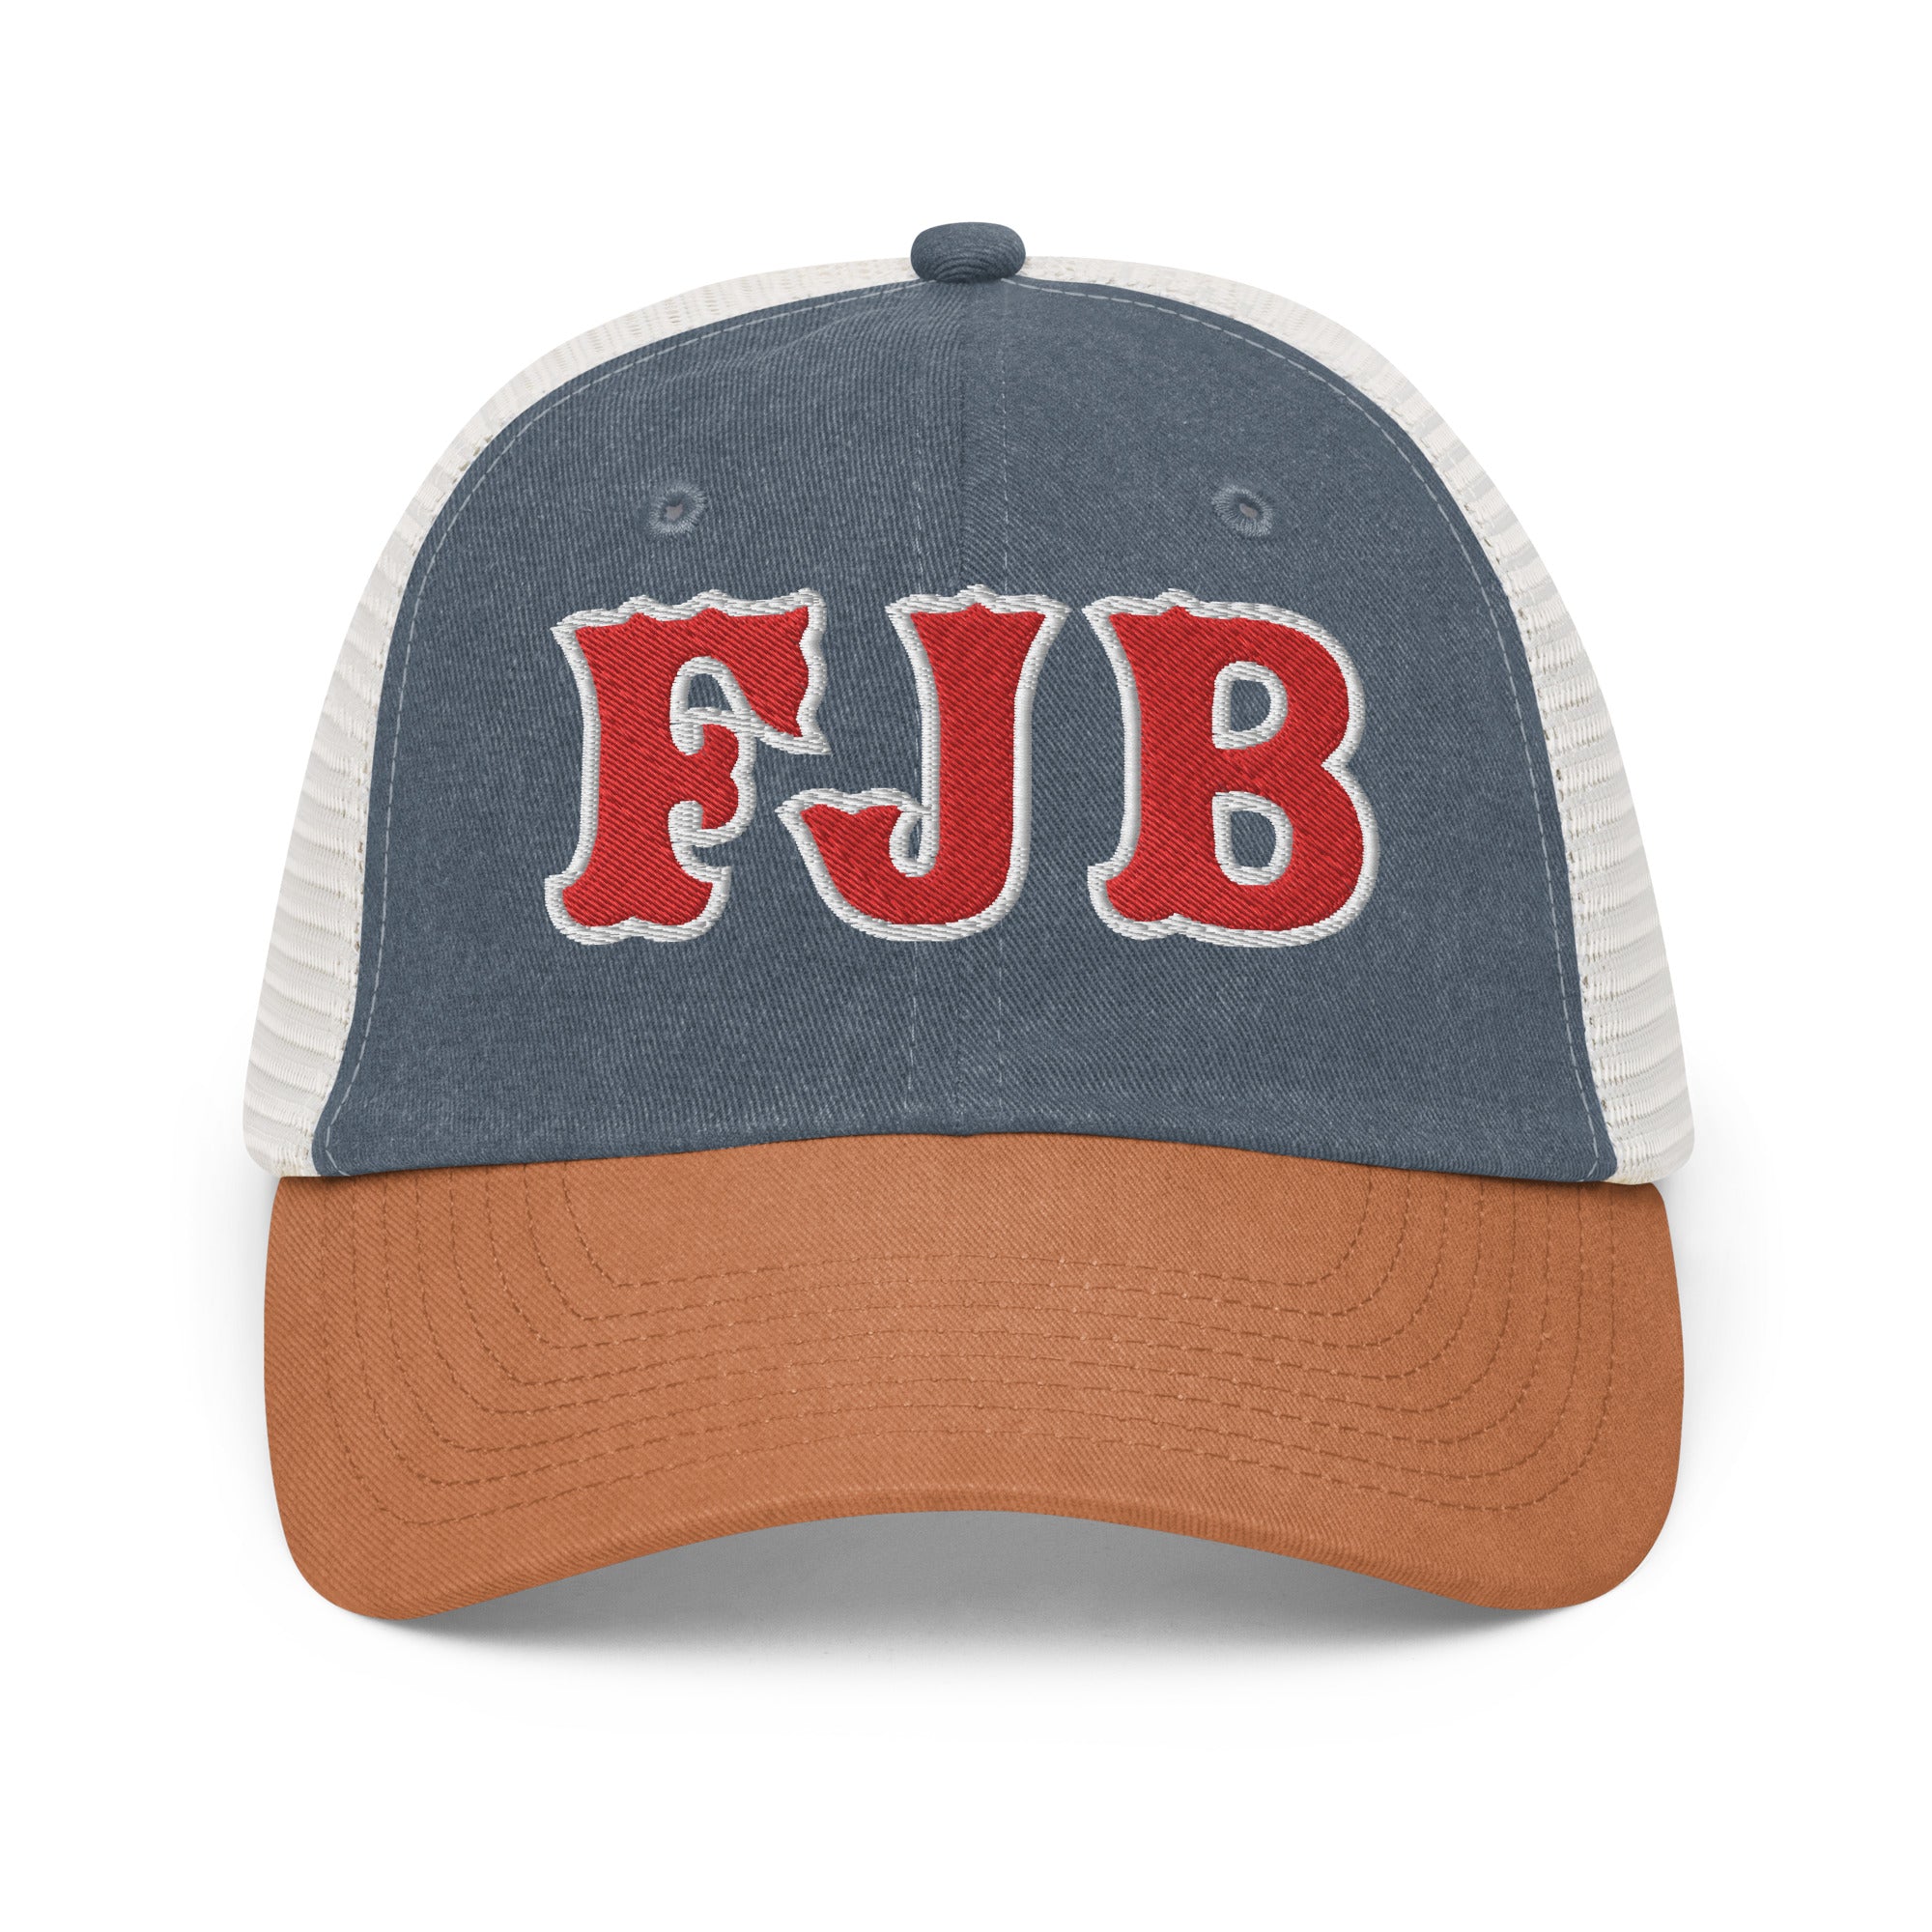 FJB Pigment-dyed cap